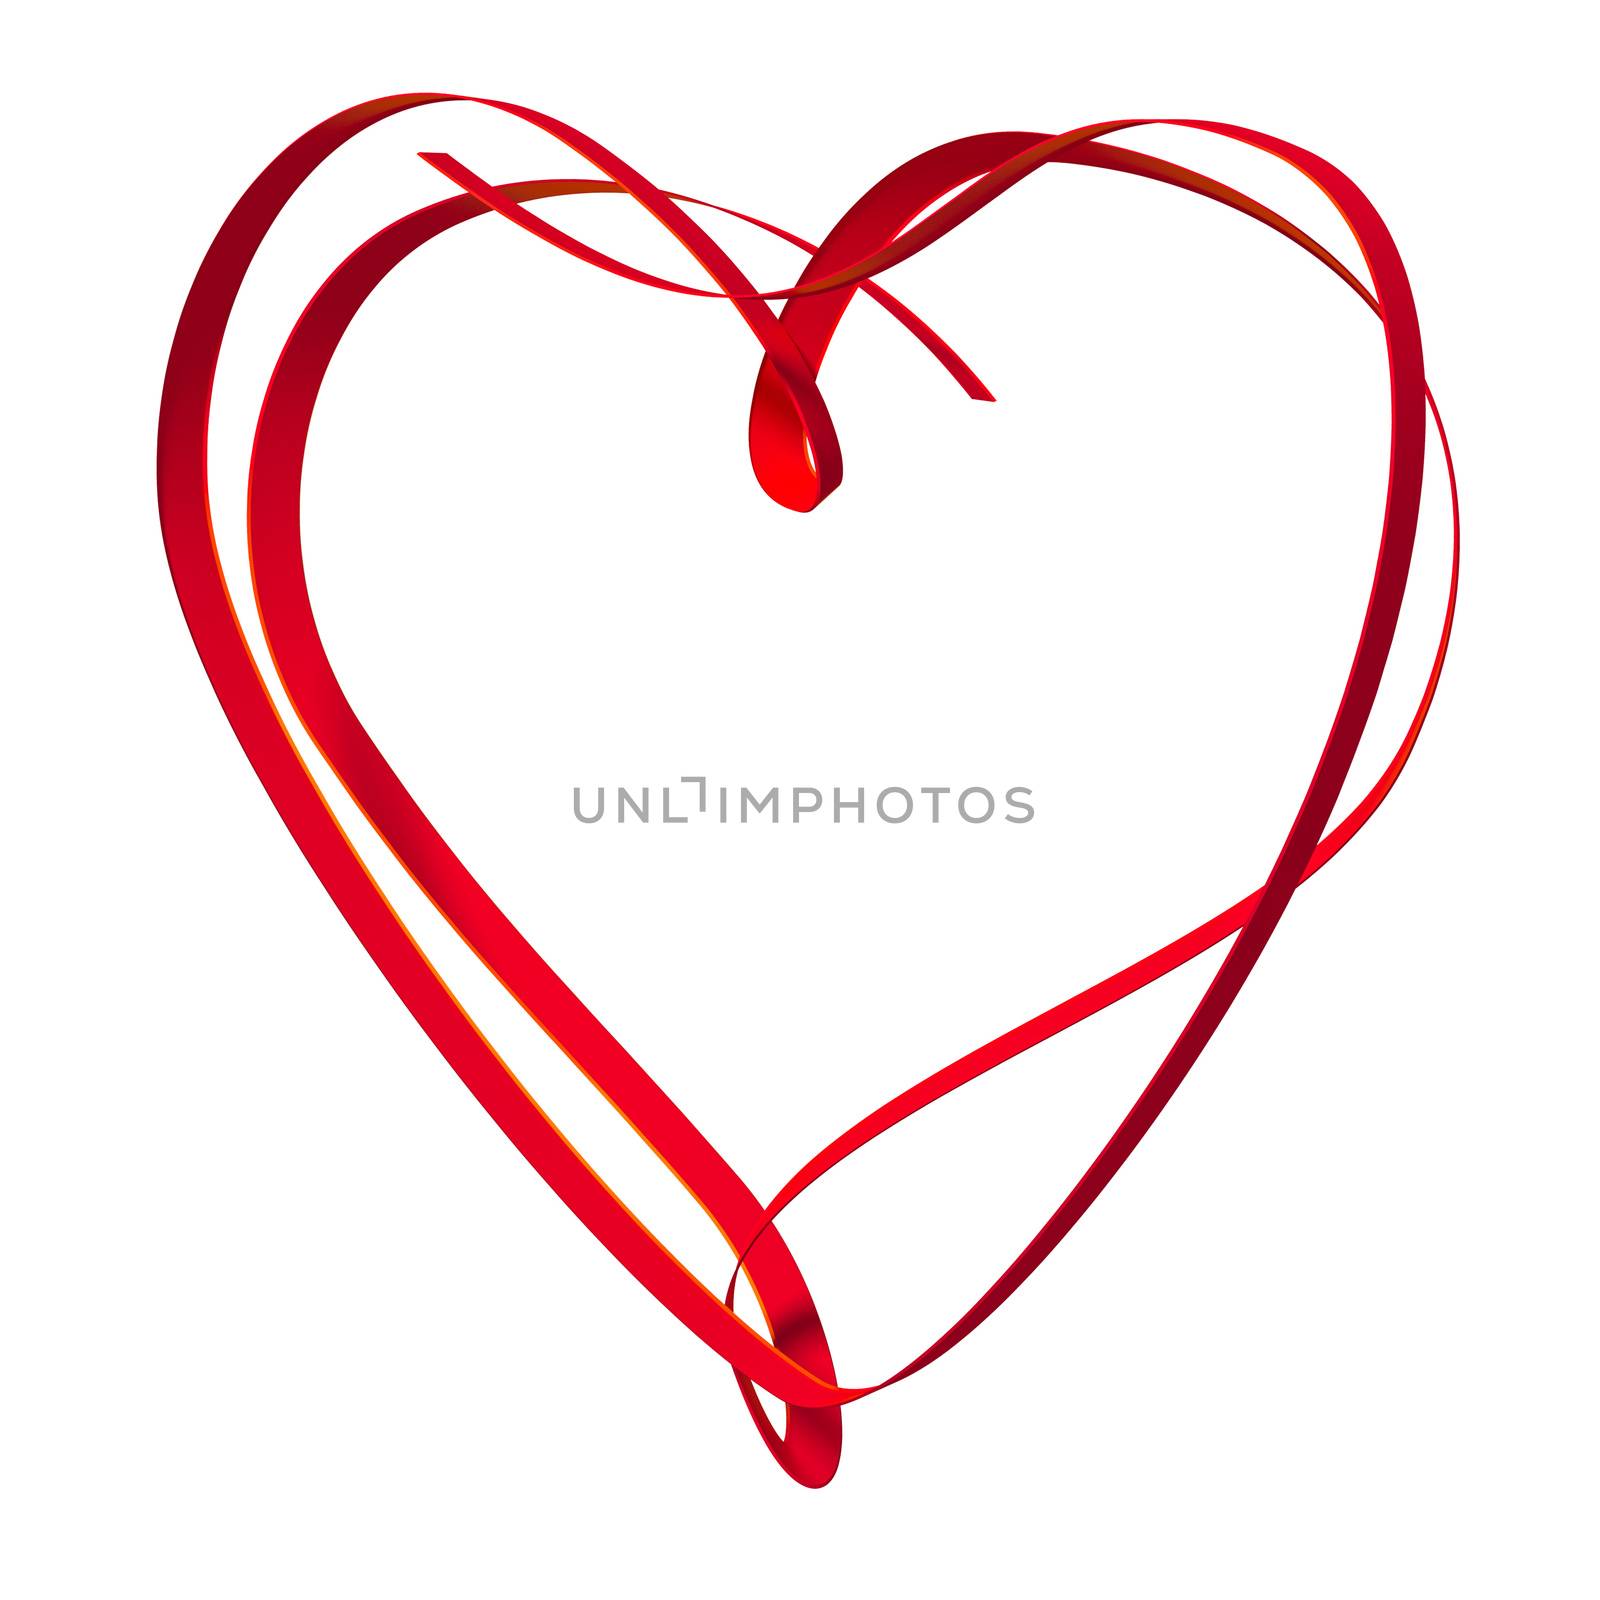 An image of a nice heart shape ribbon